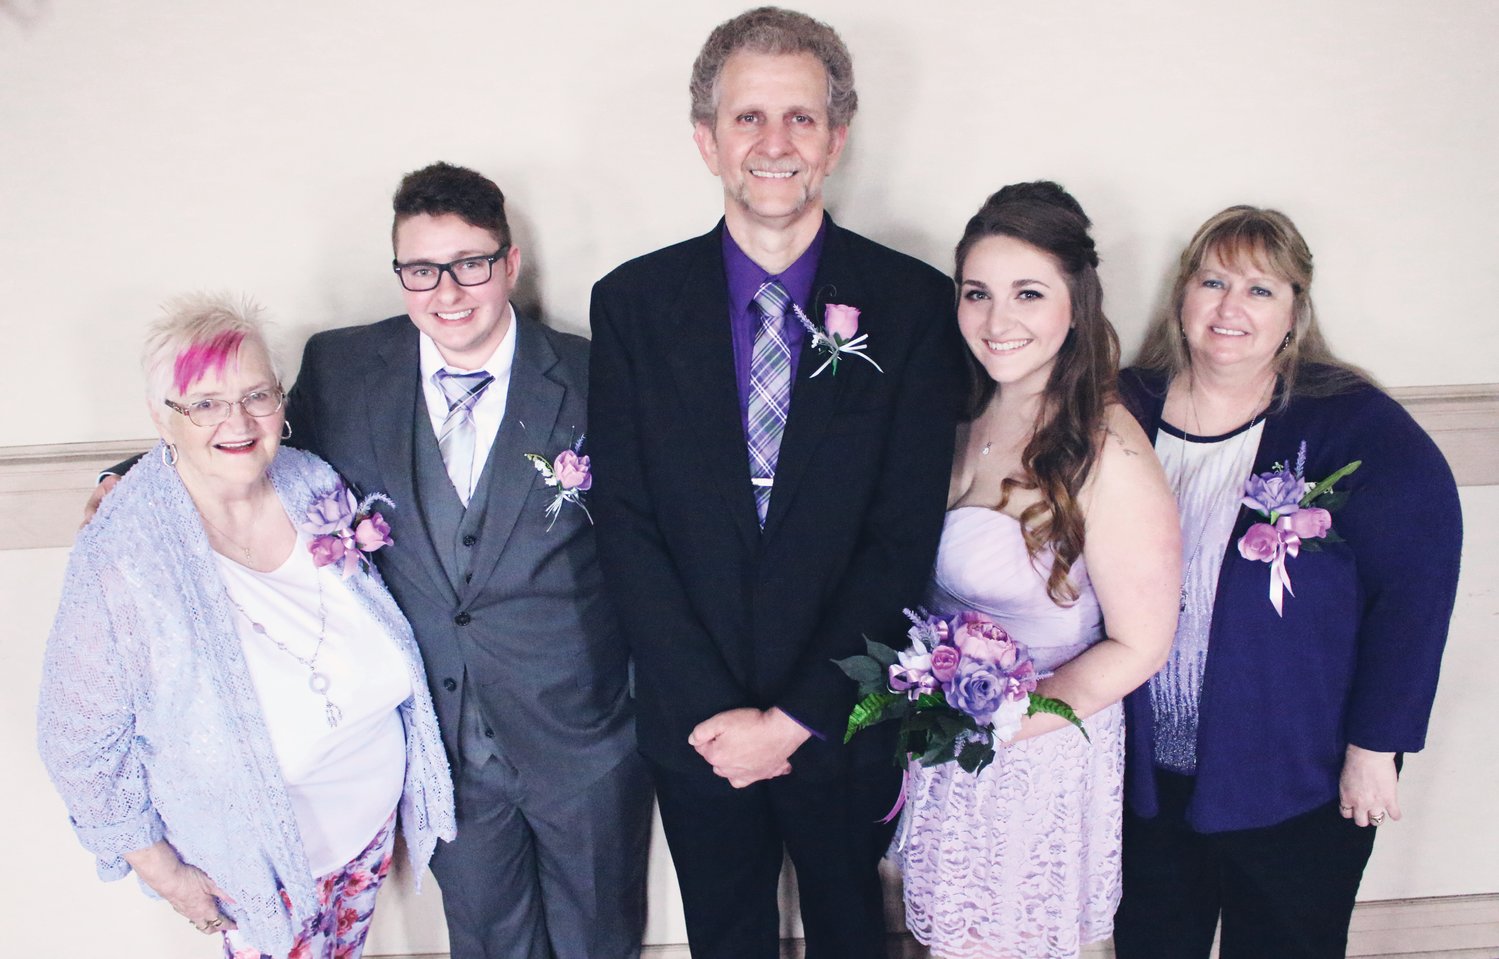 The Fettigs in a family photo. From left is Sharon Carr, Luke Fettig, Phil Fettig, Nikki Fettig and Dee Fettig.